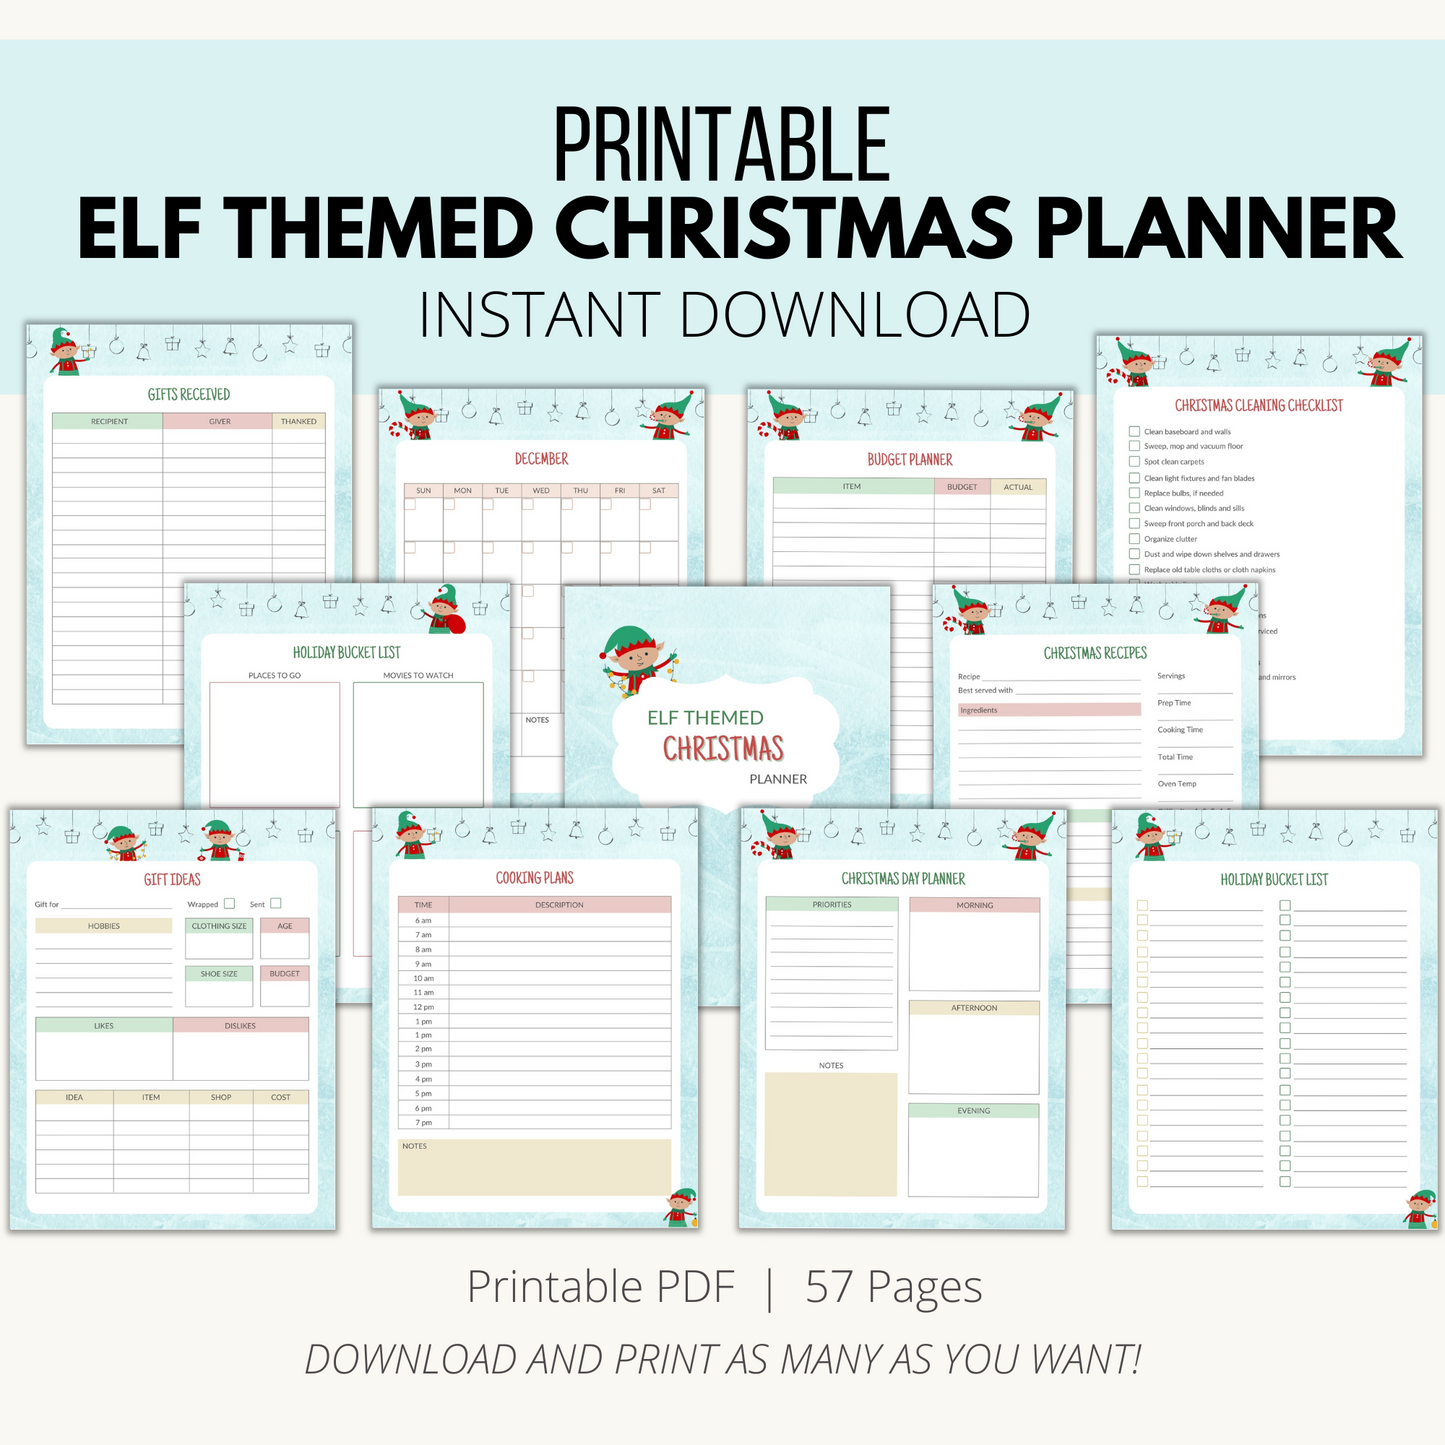 Printable Elf Themed Christmas Planner